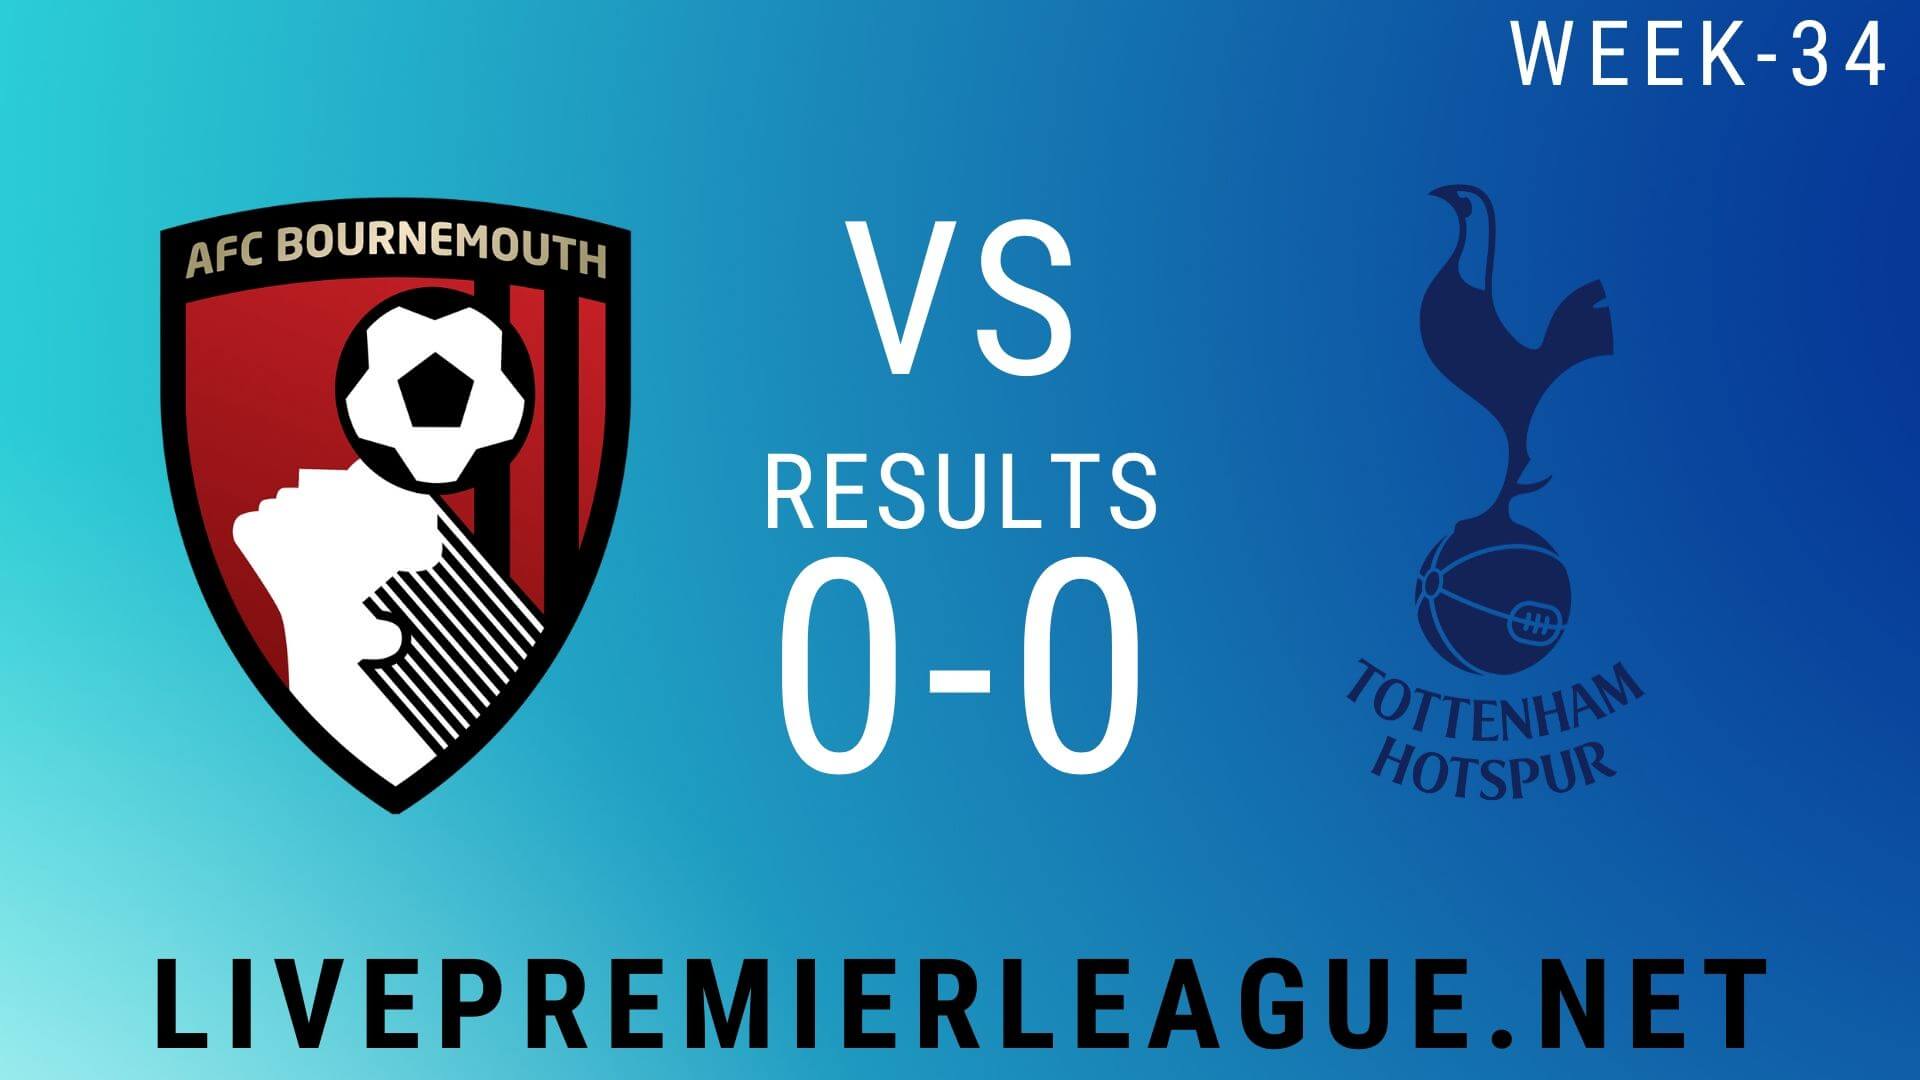 AFC Bournemouth Vs Tottenham Hotspur | Week 34 Result 2020